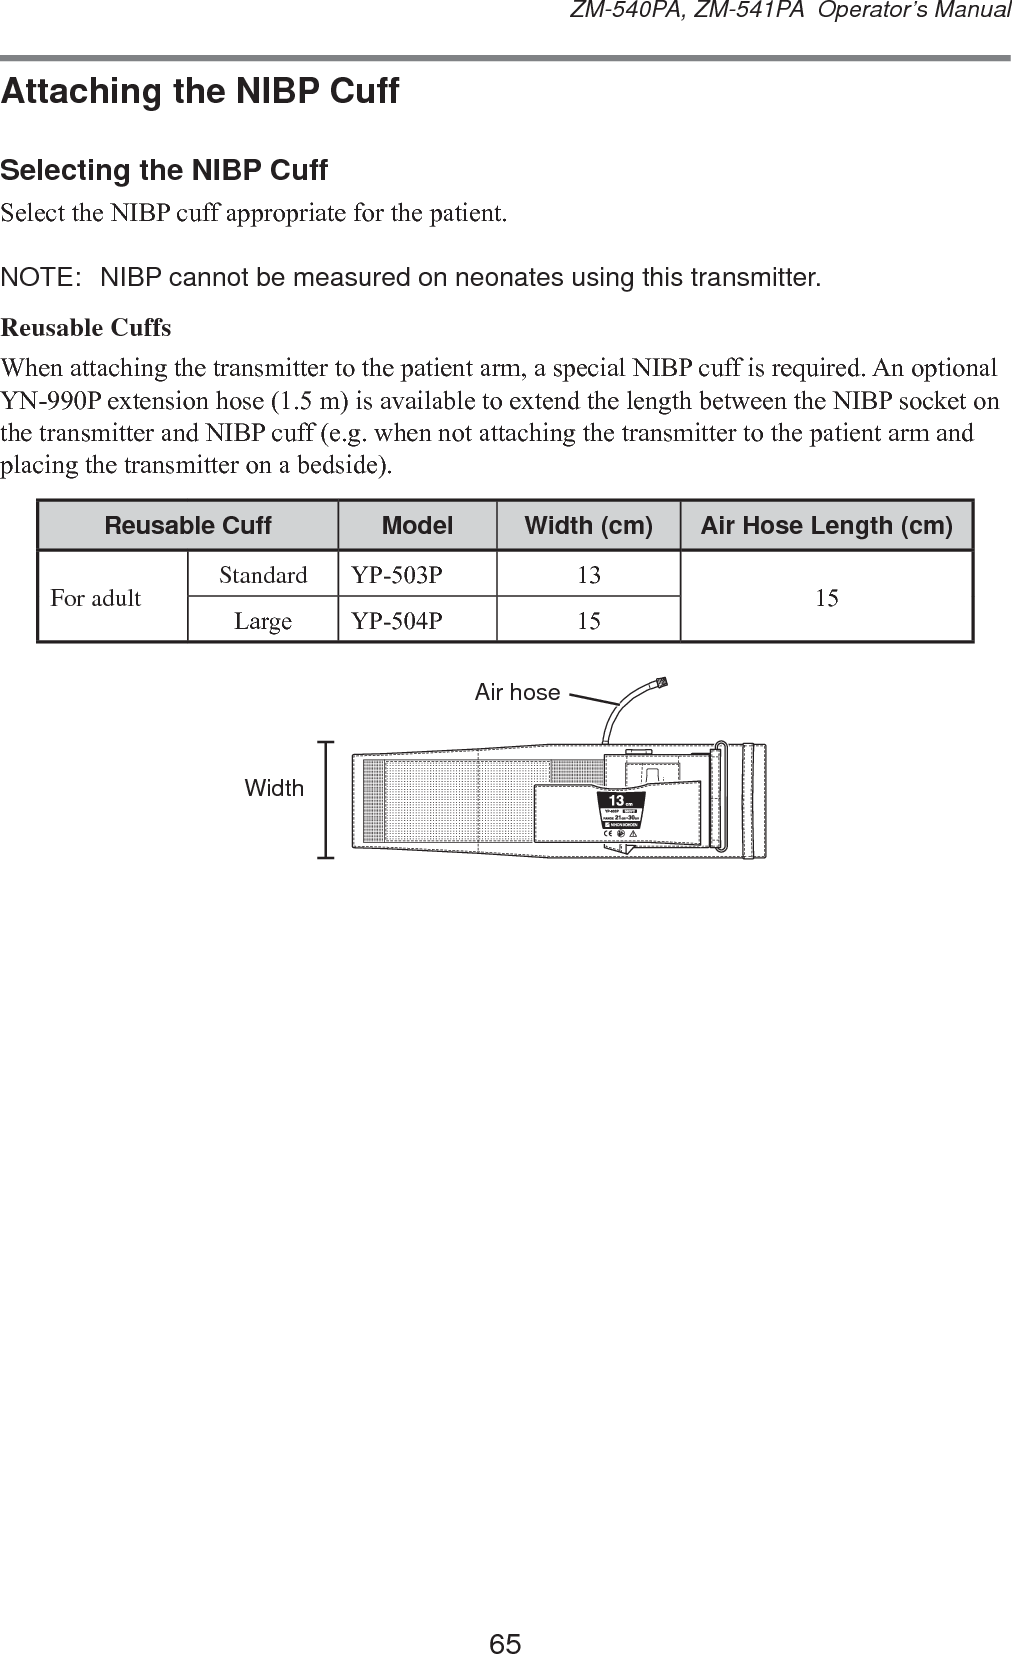 65ZM-540PA, ZM-541PA  Operator’s ManualAttaching the NIBP CuffSelecting the NIBP Cuff6HOHFWWKH1,%3FXIIDSSURSULDWHIRUWKHSDWLHQWNOTE:  NIBP cannot be measured on neonates using this transmitter.Reusable Cuffs:KHQDWWDFKLQJWKHWUDQVPLWWHUWRWKHSDWLHQWDUPDVSHFLDO1,%3FXIILVUHTXLUHG$QRSWLRQDO&lt;13H[WHQVLRQKRVHPLVDYDLODEOHWRH[WHQGWKHOHQJWKEHWZHHQWKH1,%3VRFNHWRQWKHWUDQVPLWWHUDQG1,%3FXIIHJZKHQQRWDWWDFKLQJWKHWUDQVPLWWHUWRWKHSDWLHQWDUPDQGSODFLQJWKHWUDQVPLWWHURQDEHGVLGHReusable Cuff Model Width (cm) Air Hose Length (cm)For adult Standard &lt;33 /DUJH &lt;33 WidthAir hose